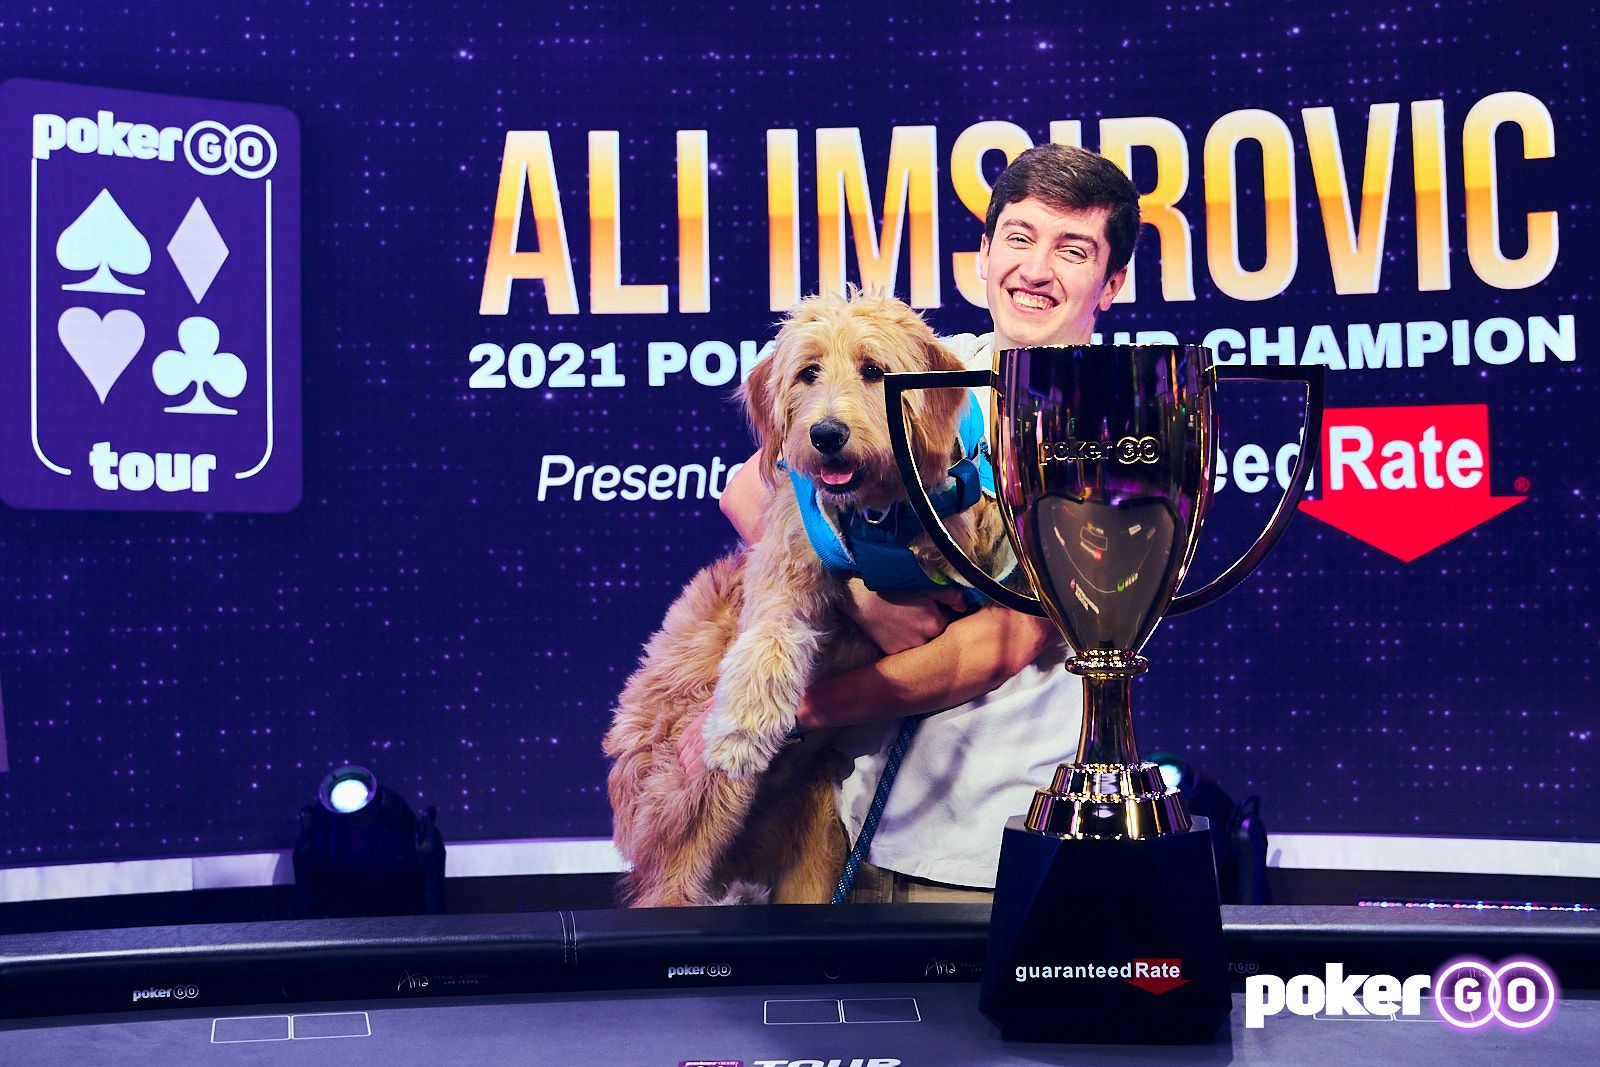 Six Million Dollar Man Ali Imsirovic Wins PokerGo Tour Player of the Year